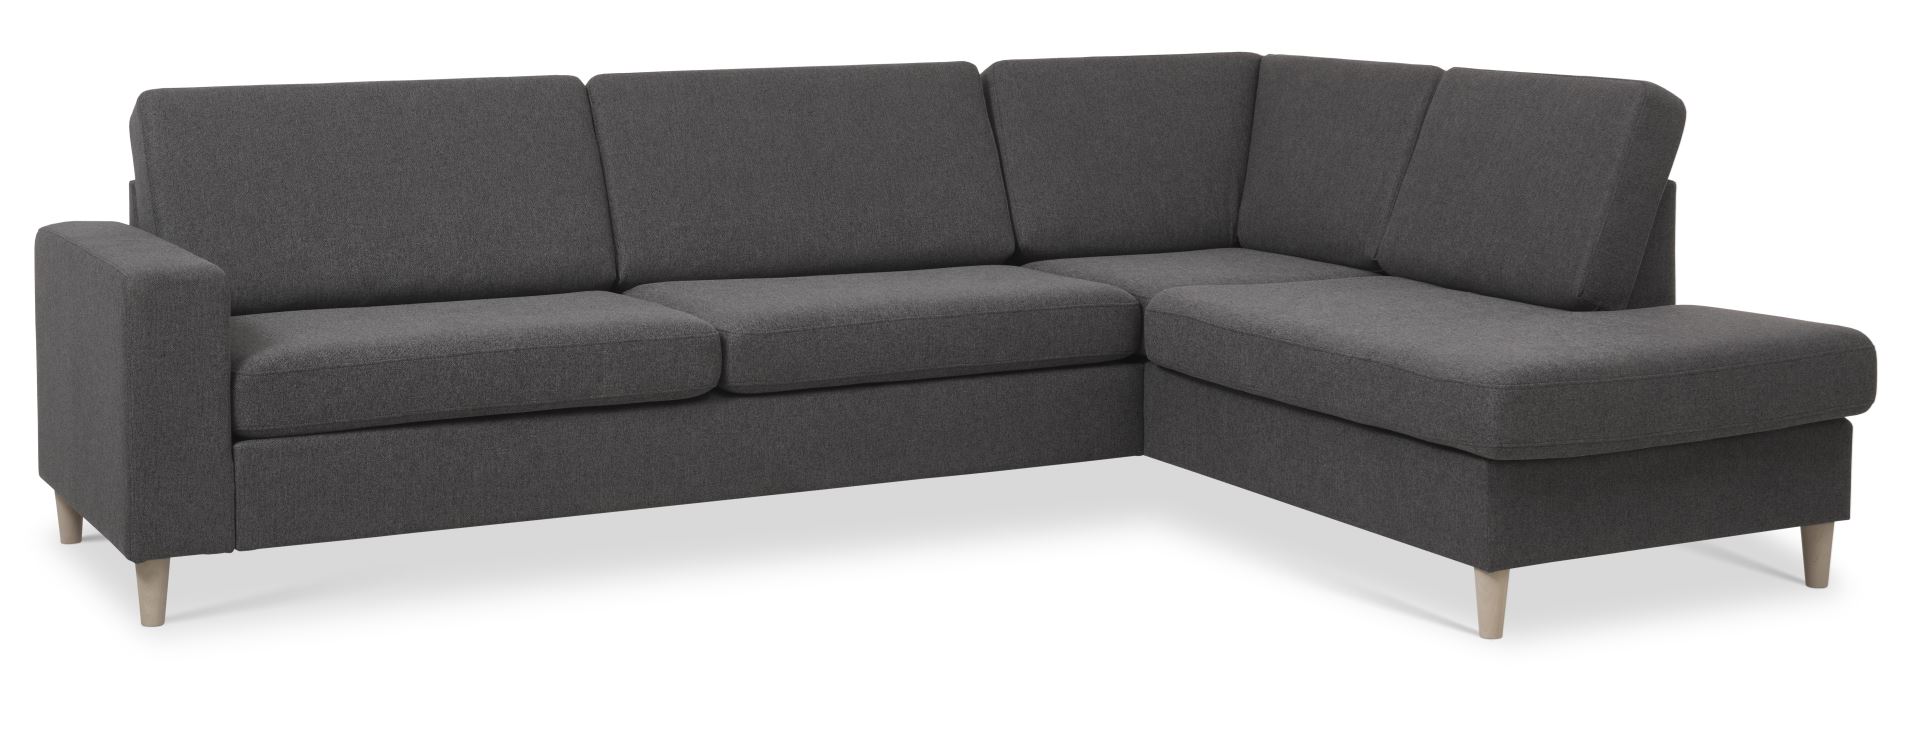 Pan set 3 OE right sofa med chaiselong - antracitgråt polyester stof og natur træ